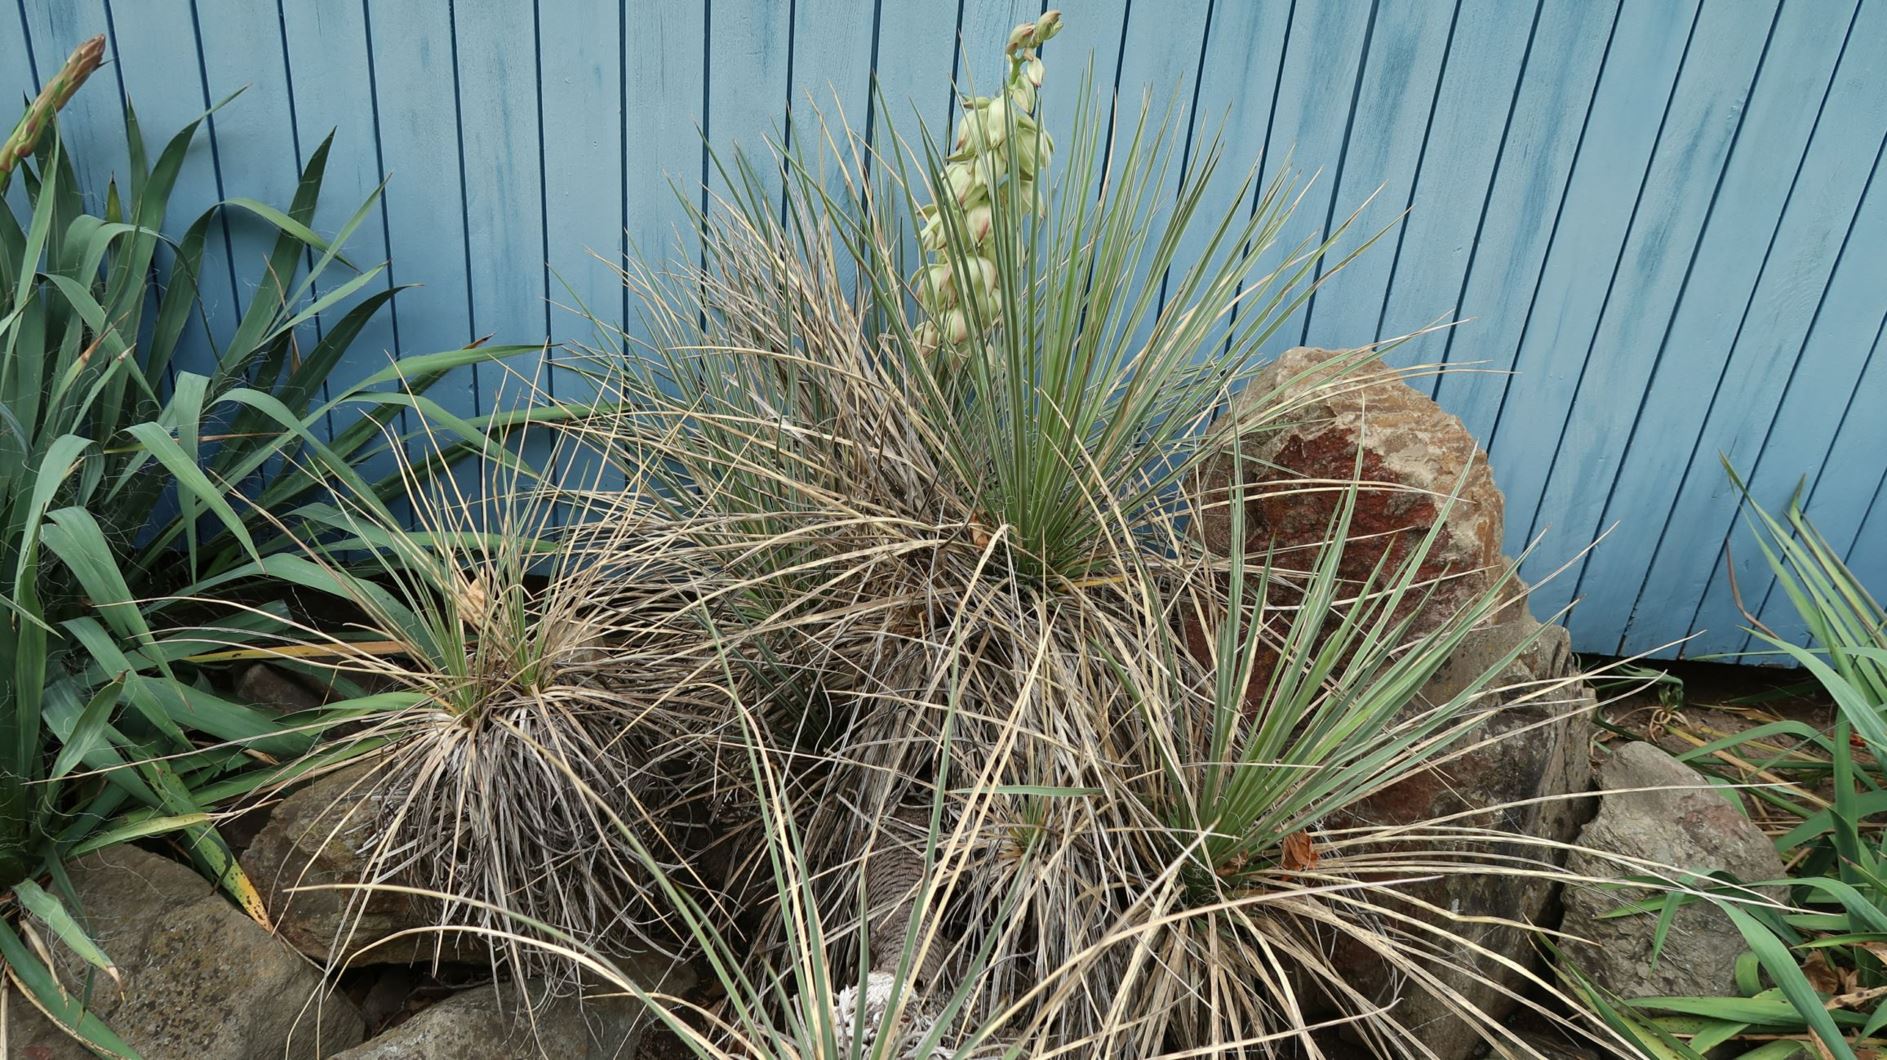 Yucca glauca - Blaugrüne Palmlilie, beargrass, soapweed yucca